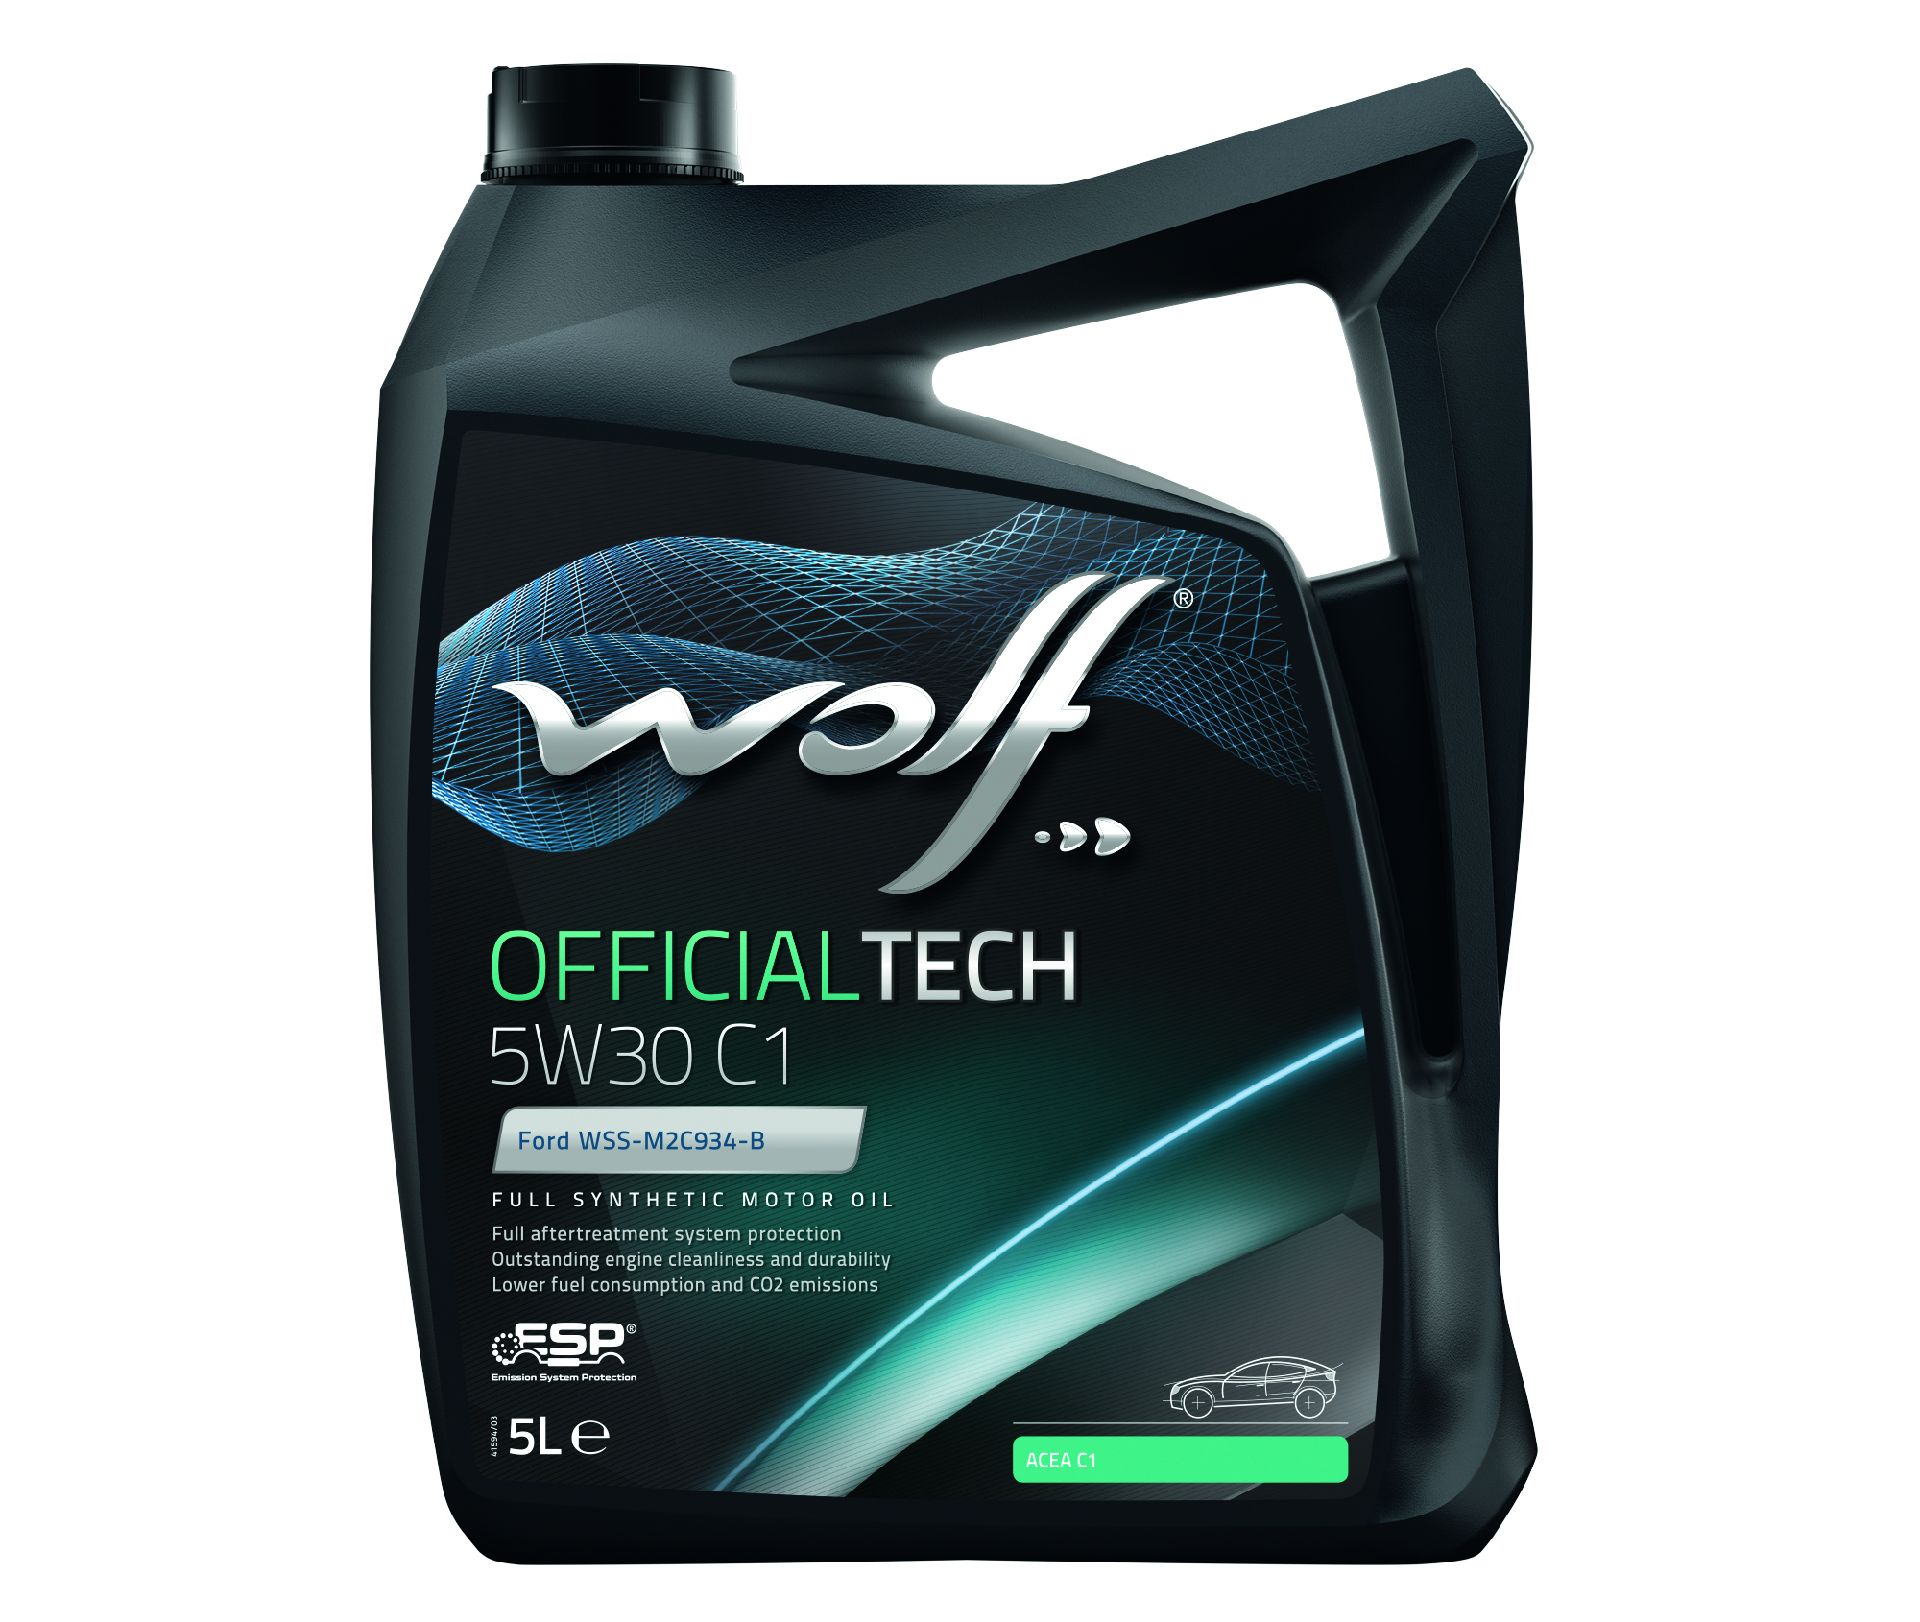 Wolf official tech 5w30 c1